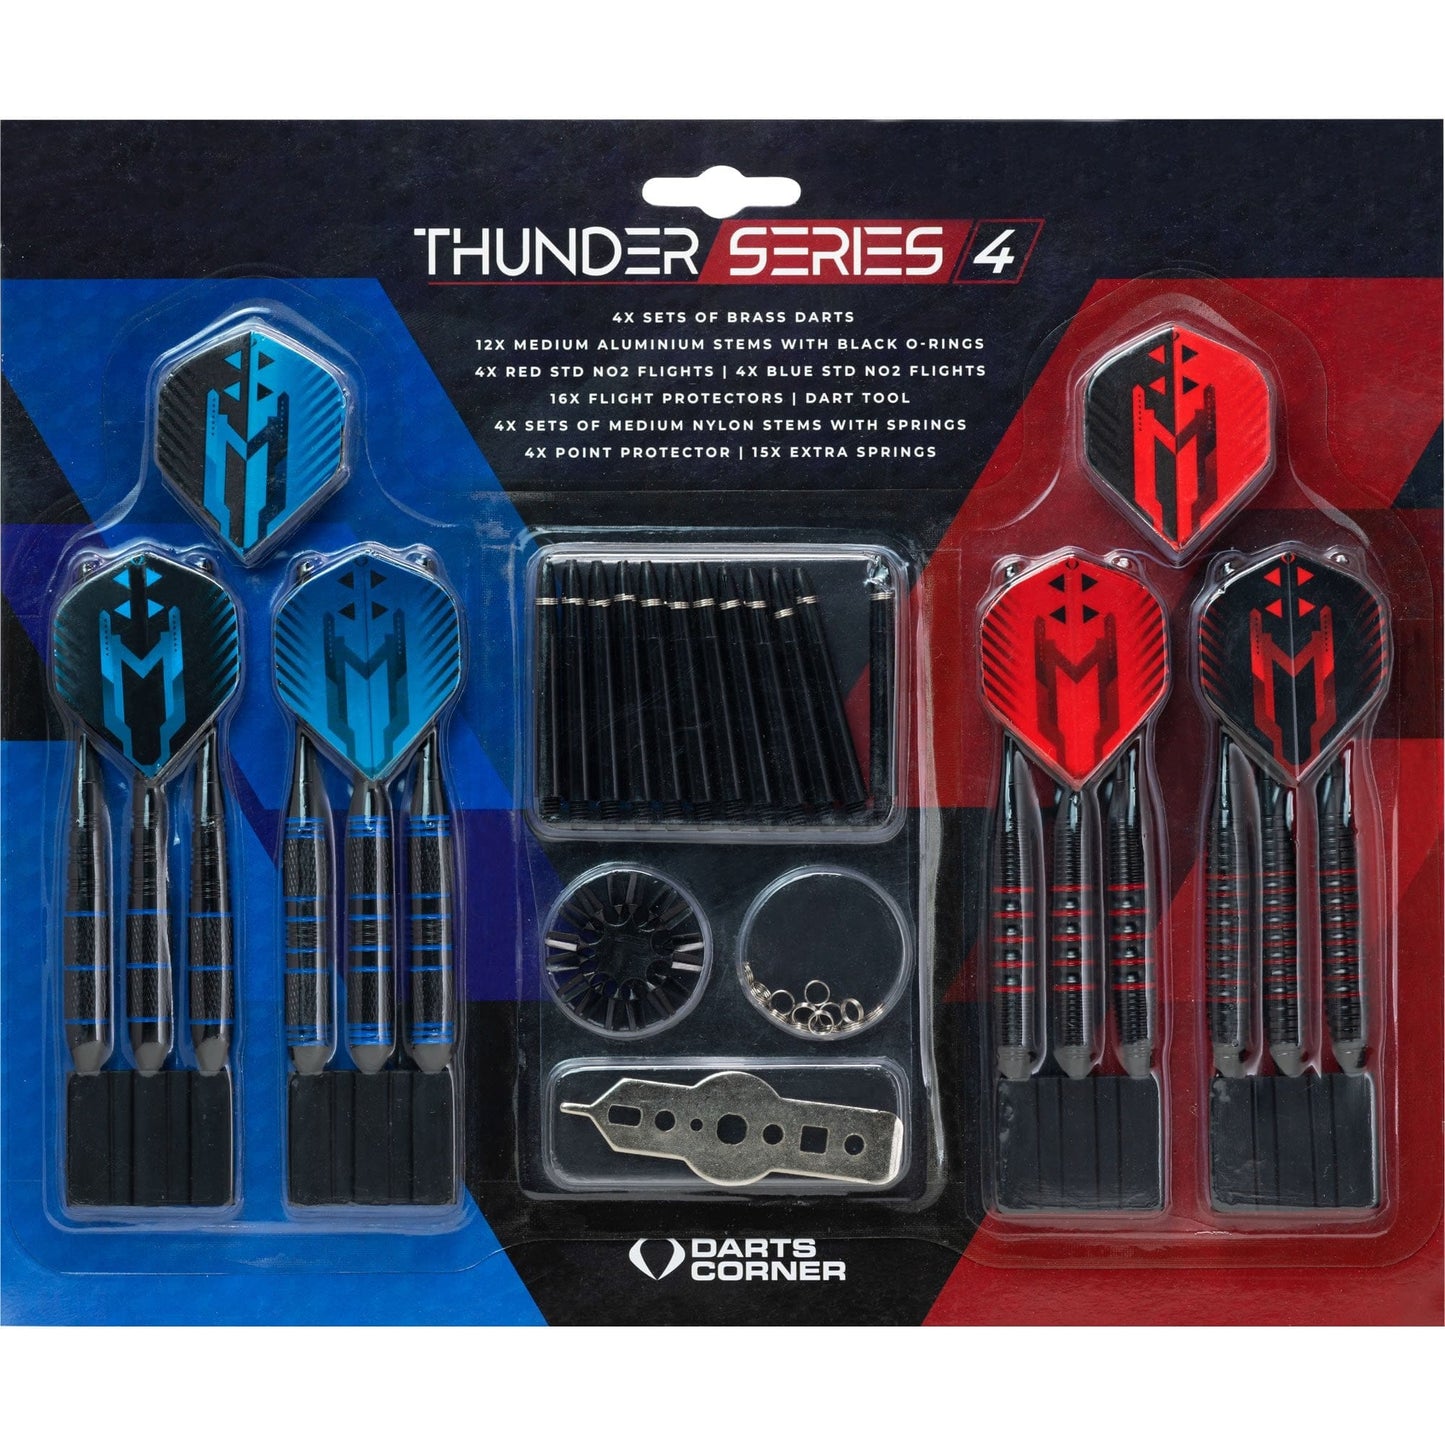 Darts Corner - Thunder Series 4 - Steel Tip Brass - 4 Sets Darts - Blue & Red - 21g 22g 23g 24g 23g